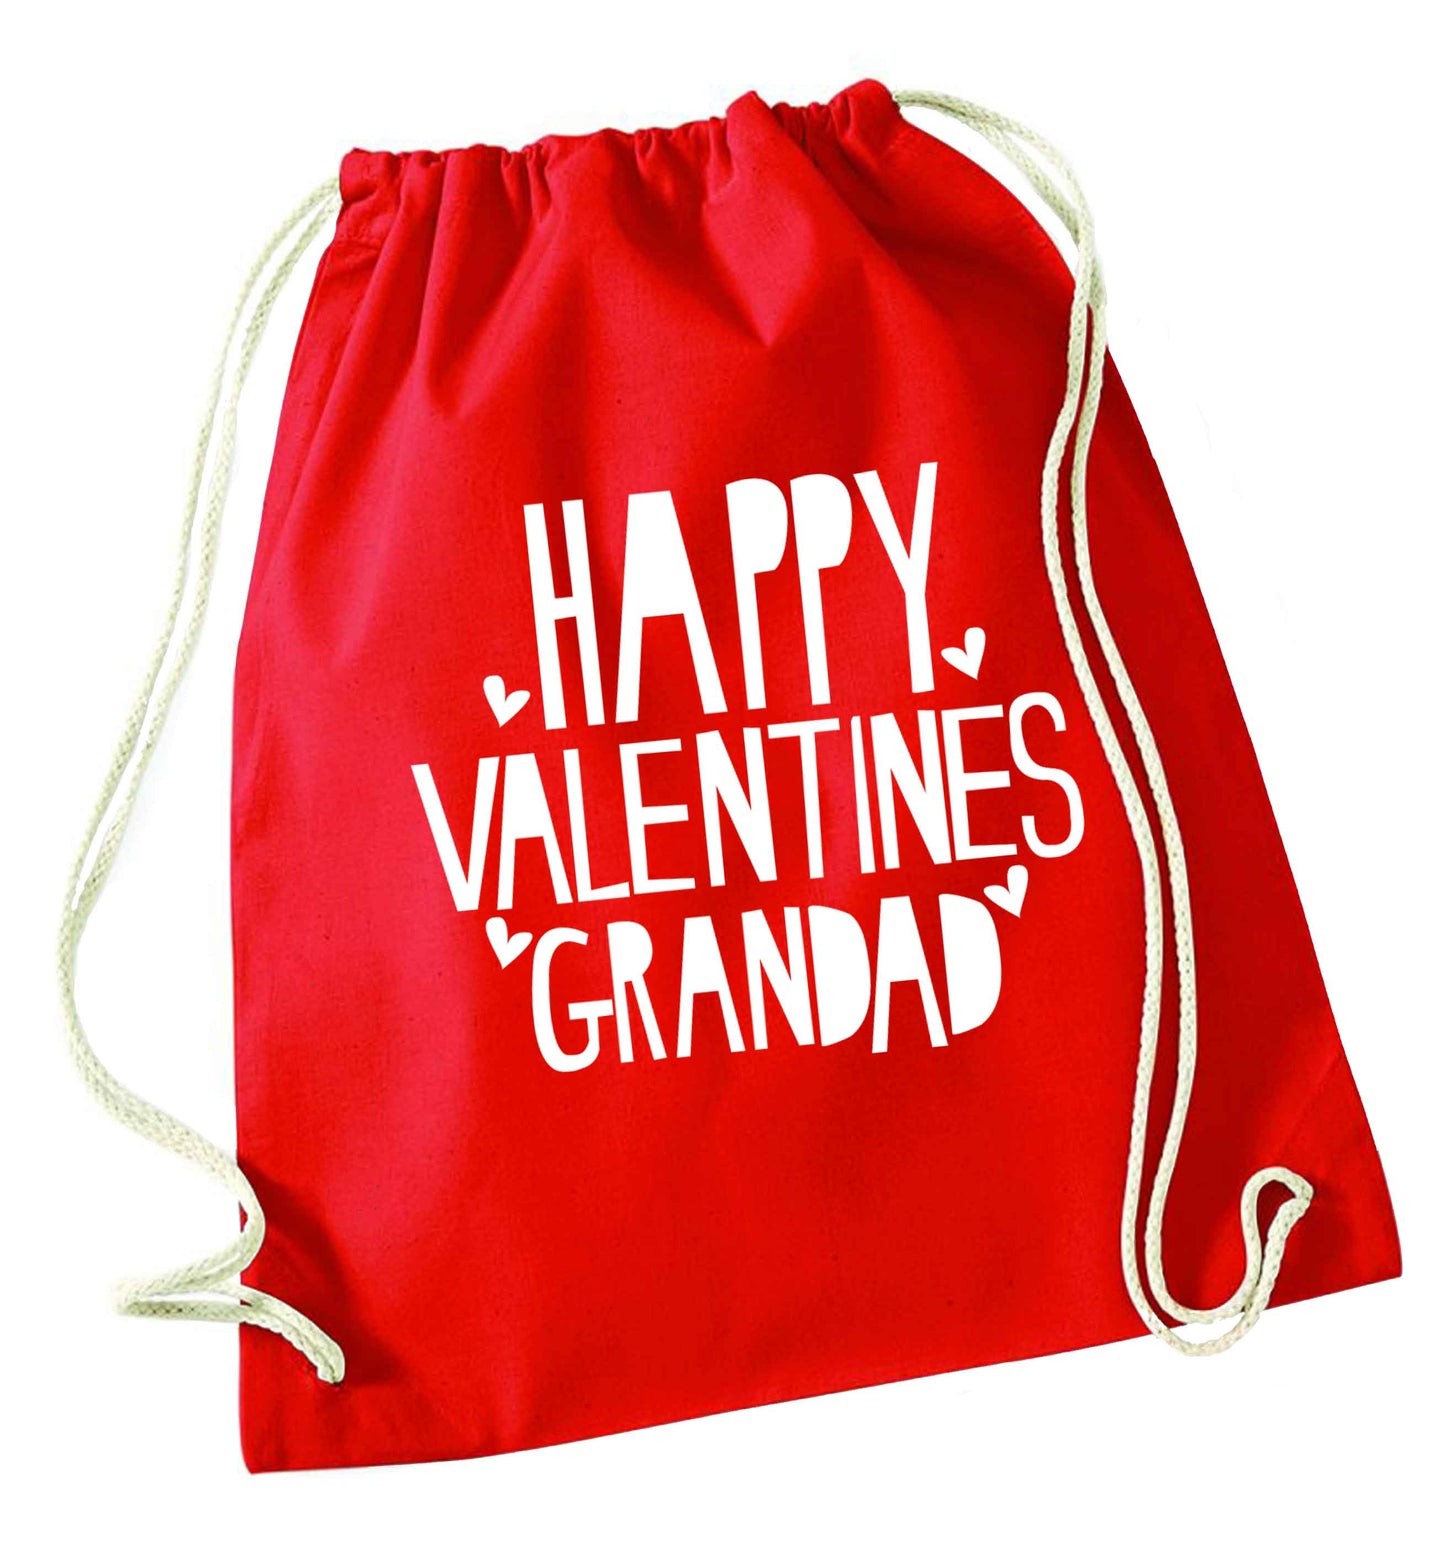 Happy valentines grandad red drawstring bag 